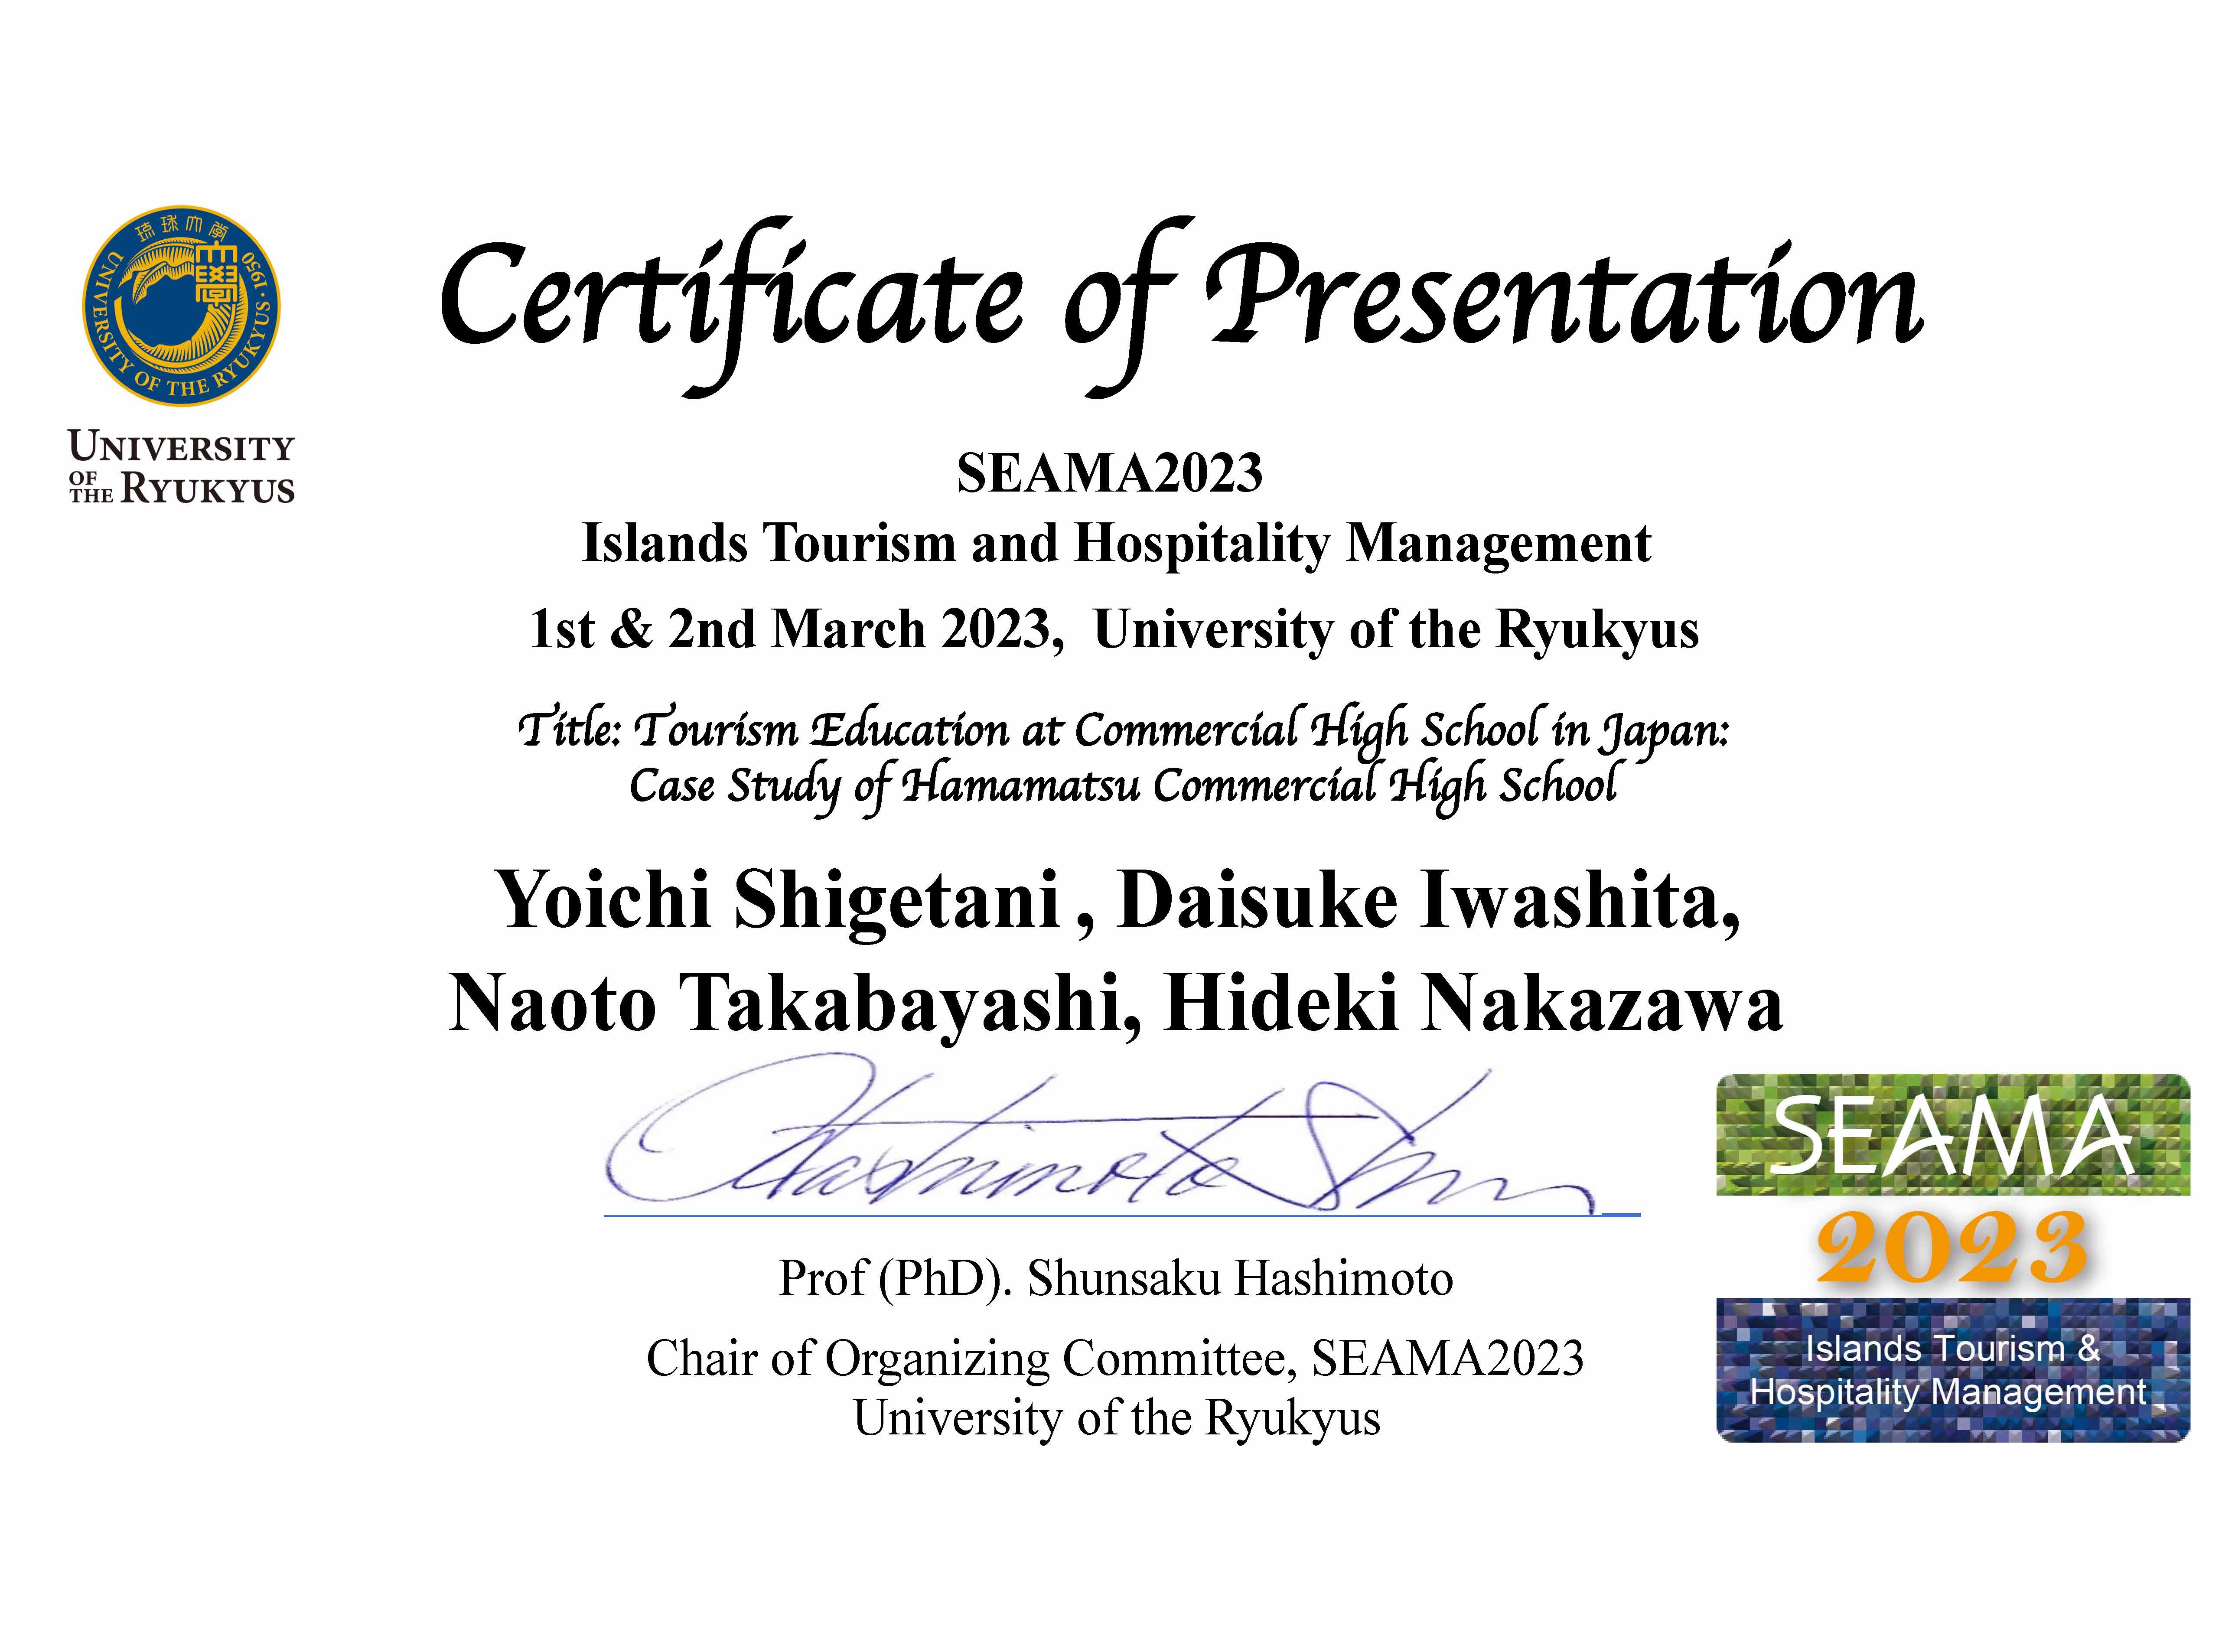 Shigetani_Certificate_Presentation_SEAMA2023.jpg